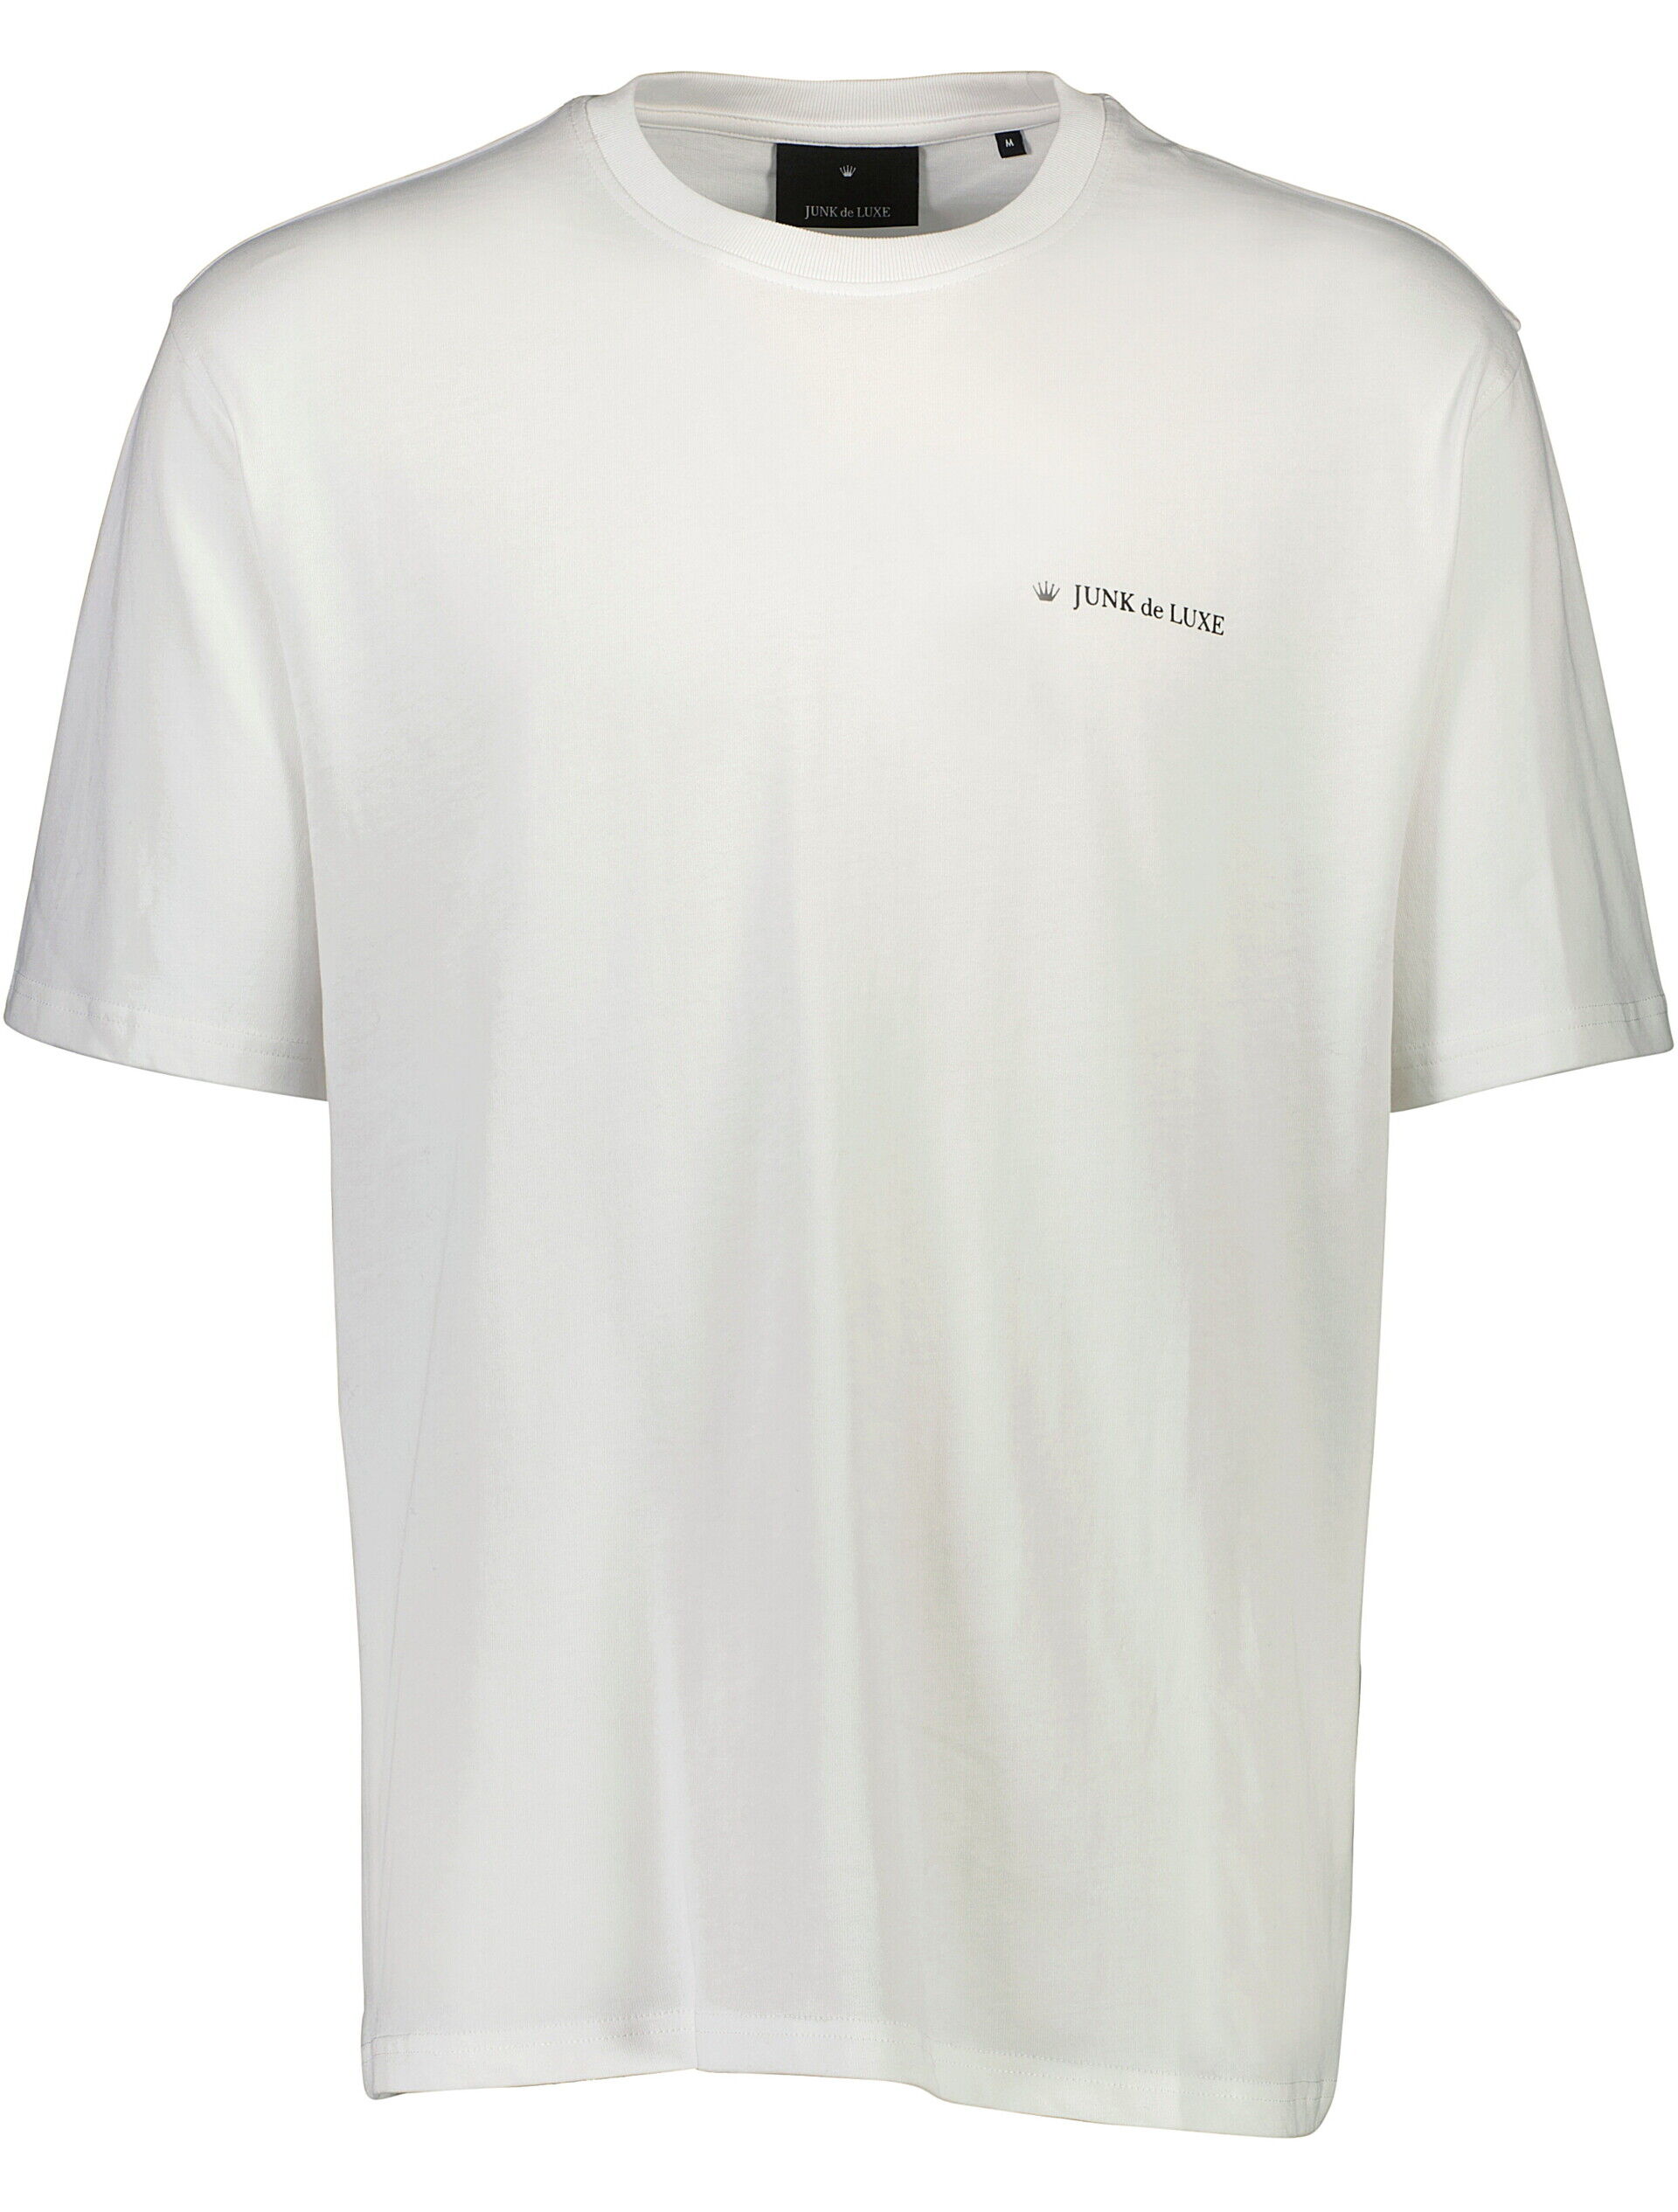 Junk de Luxe  T-shirt Hvid 60-455019